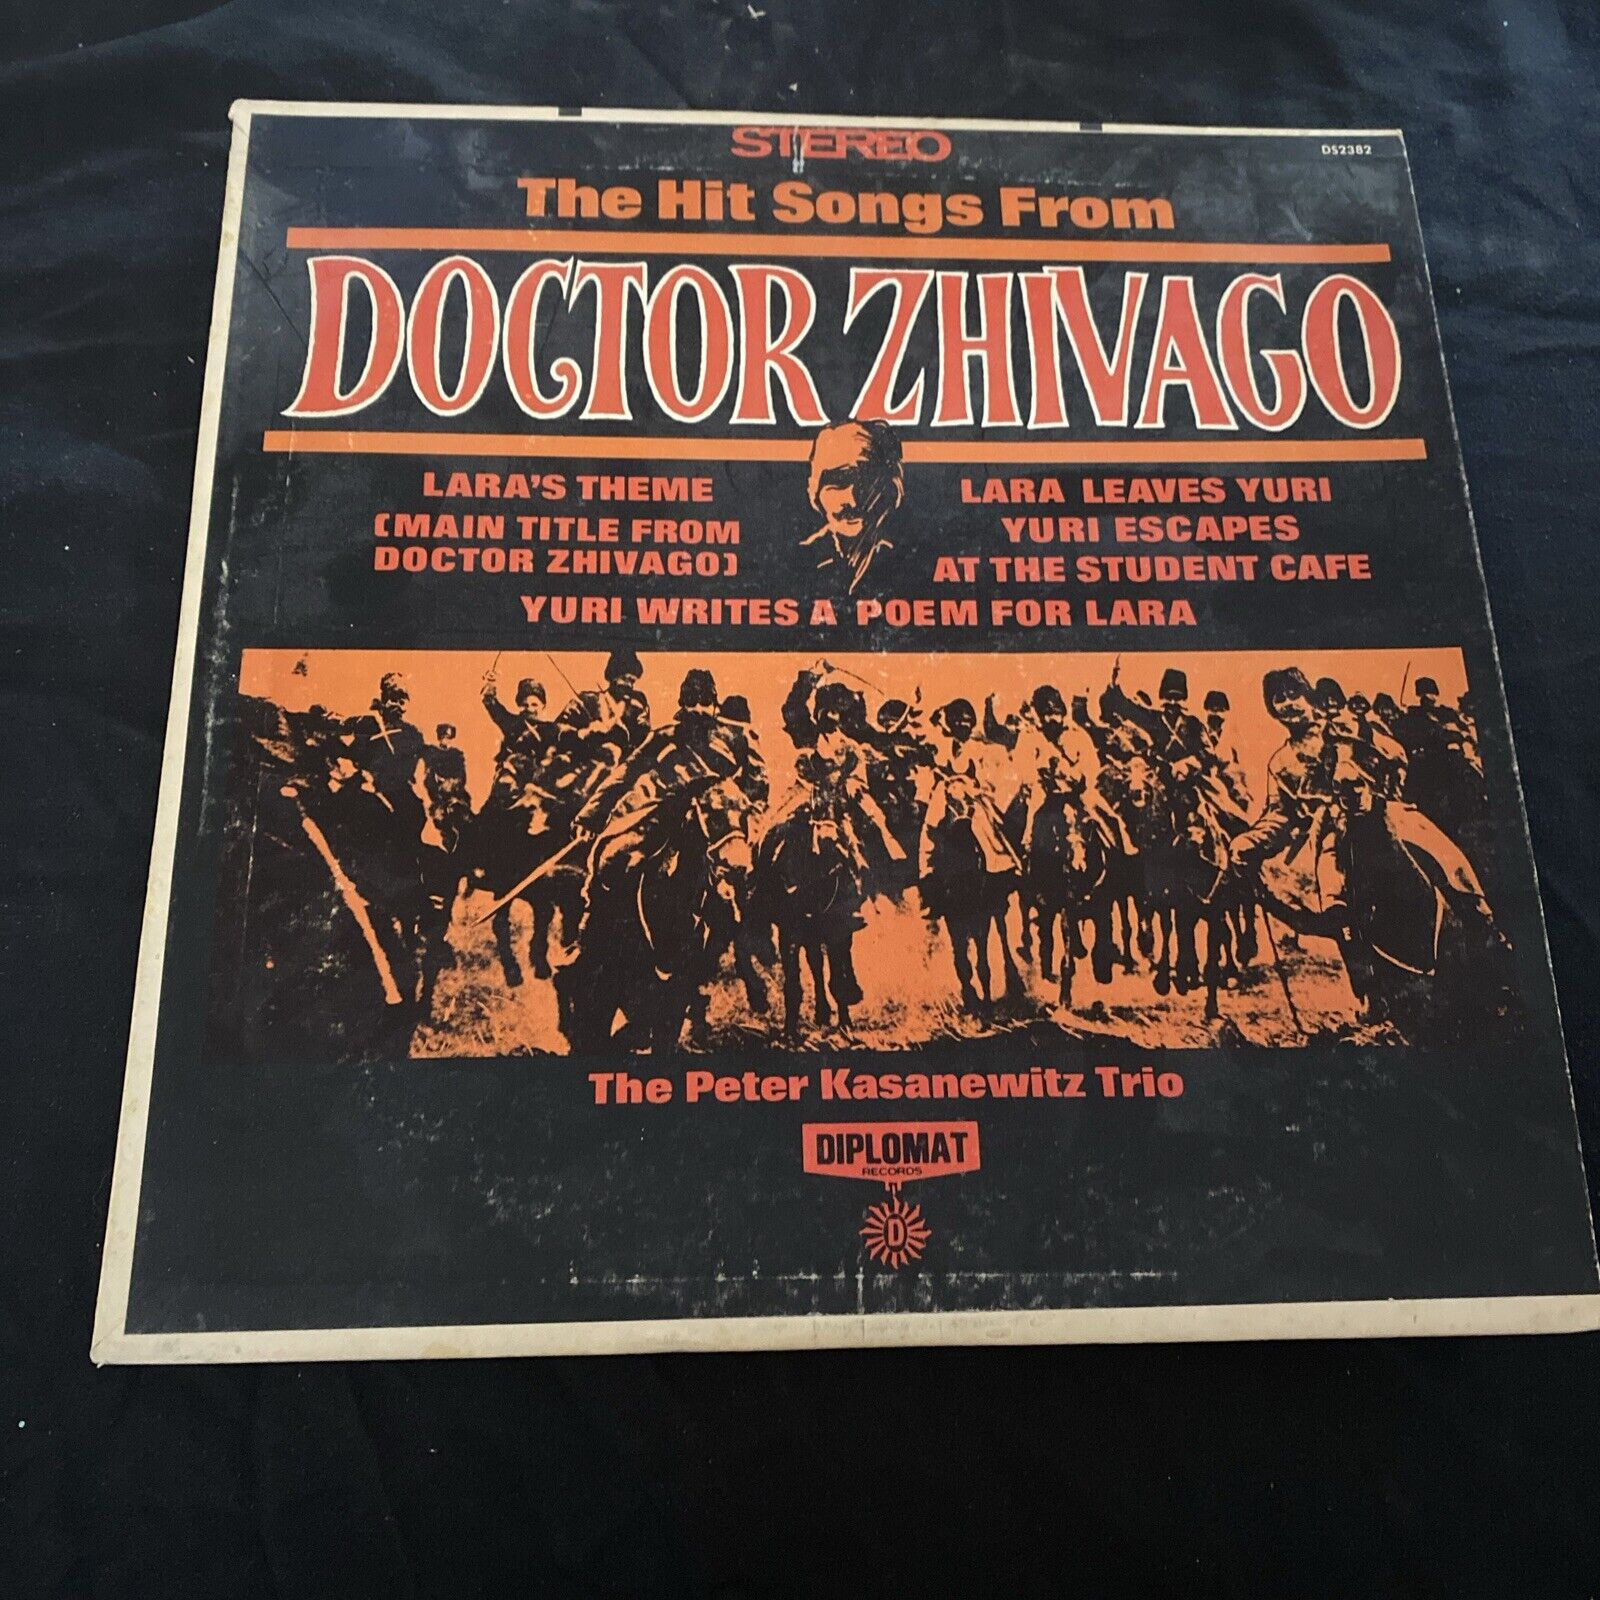 Vintage The Hit Songs From Doctor Zhivago Album Vinyl LP Record Album